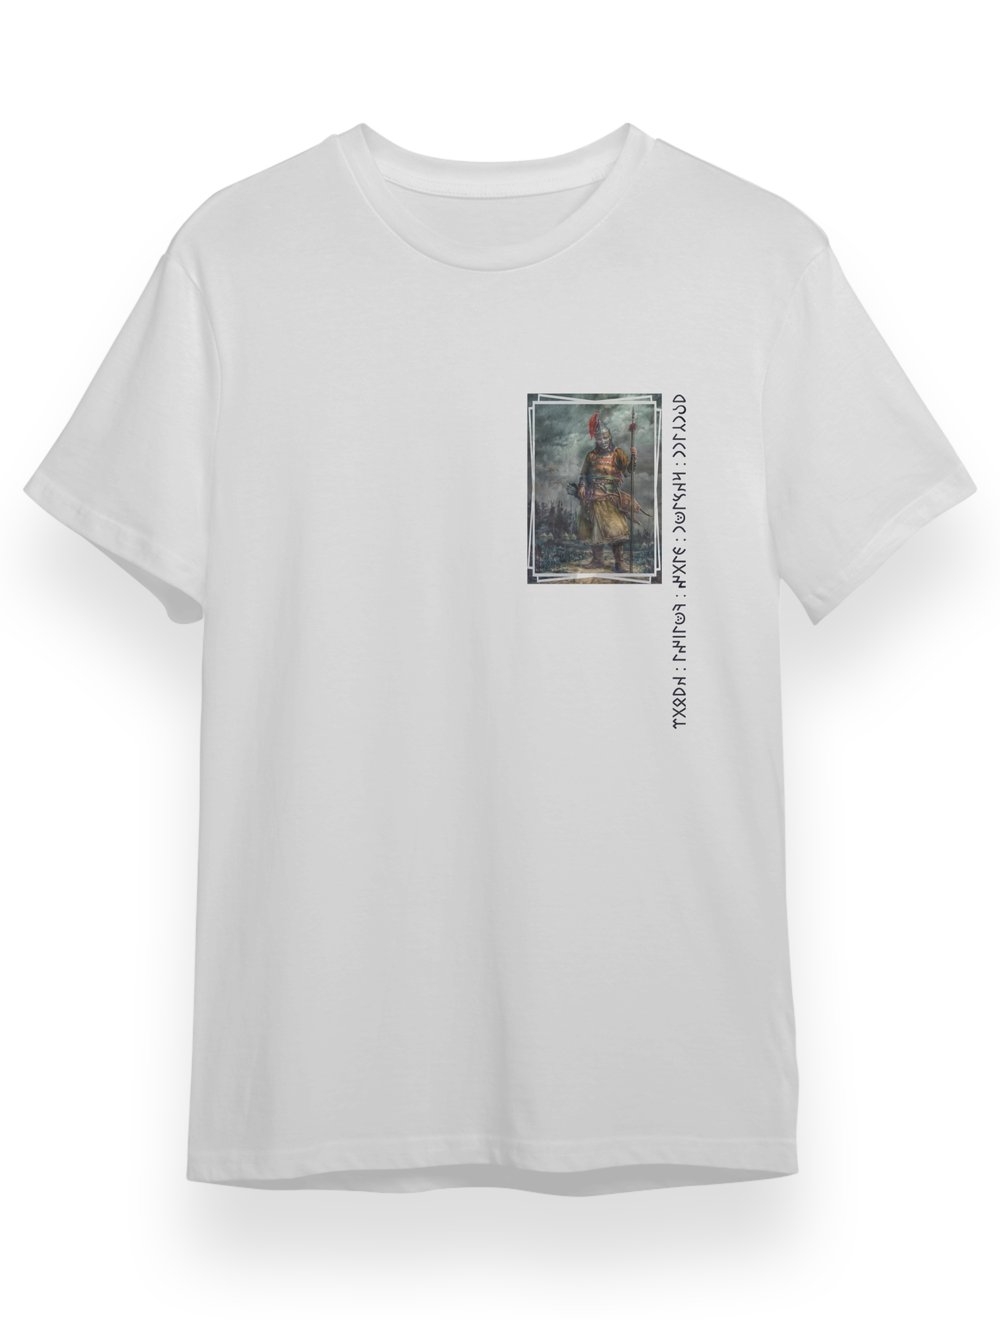 Kıpçak Savaşçısı T-Shirt 8101718